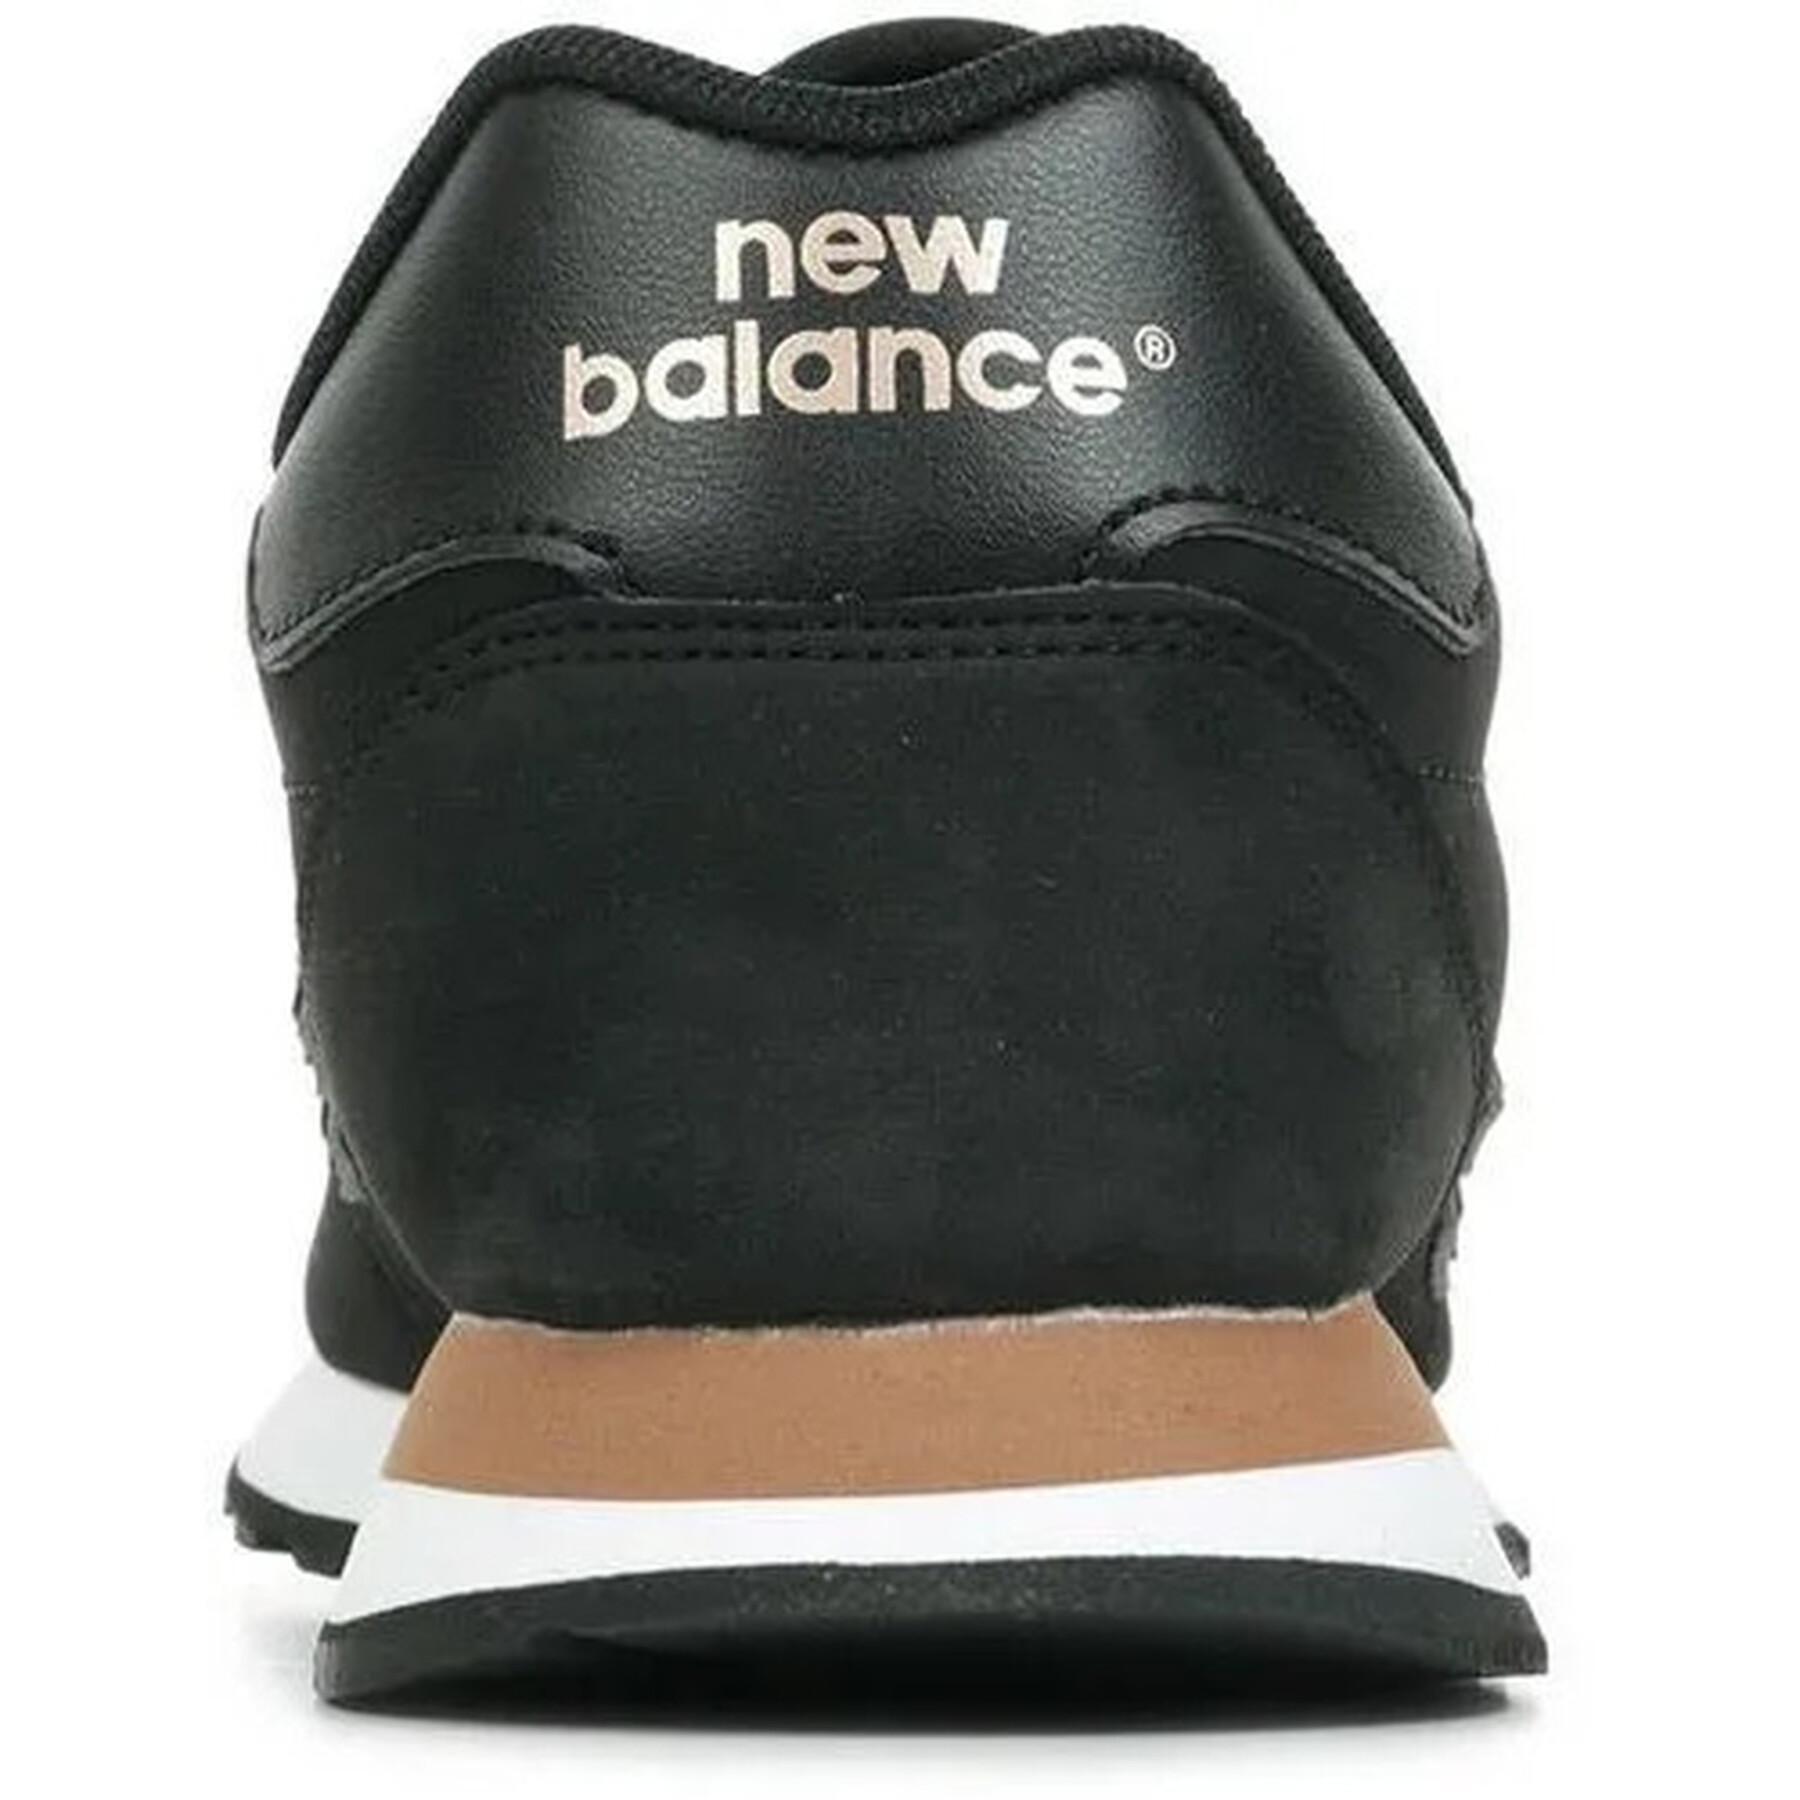 Women's sneakers New Balance 500 classic